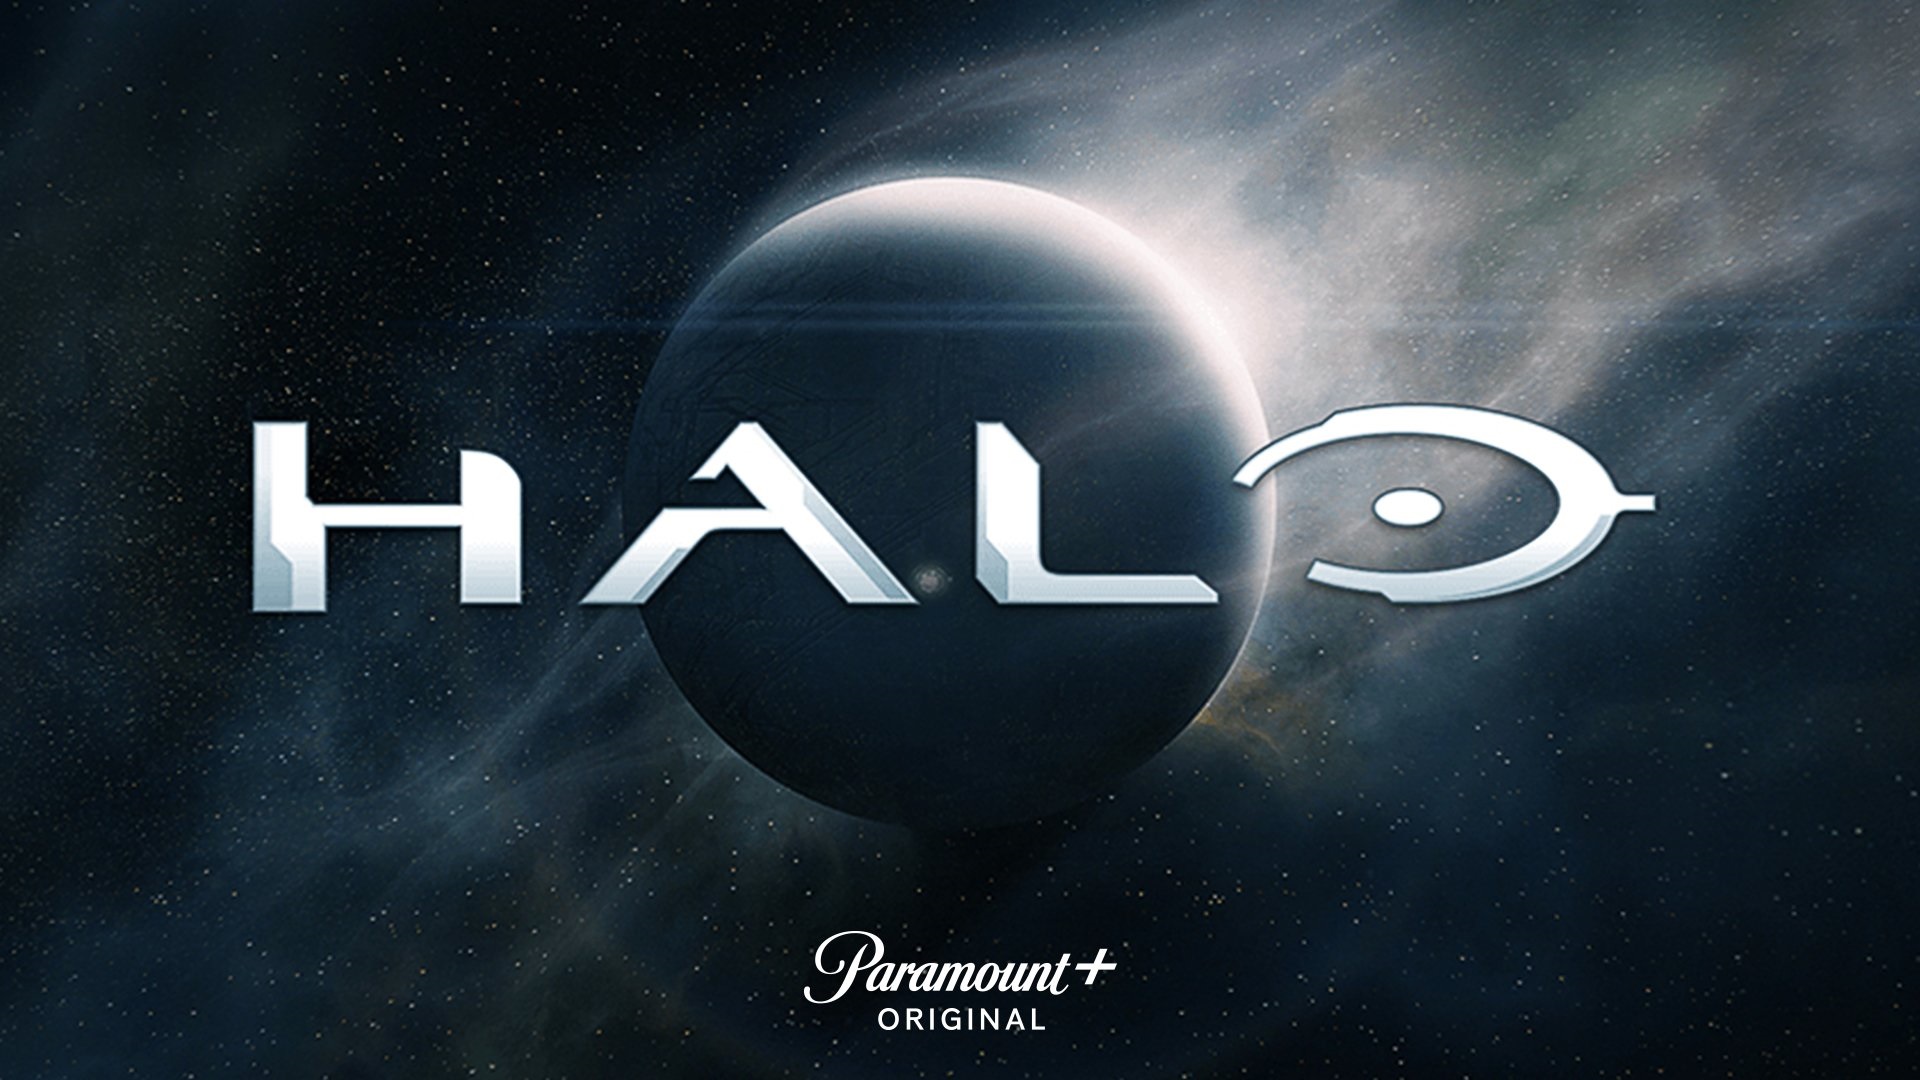 Halo – série da Paramount+ ganha primeiro teaser